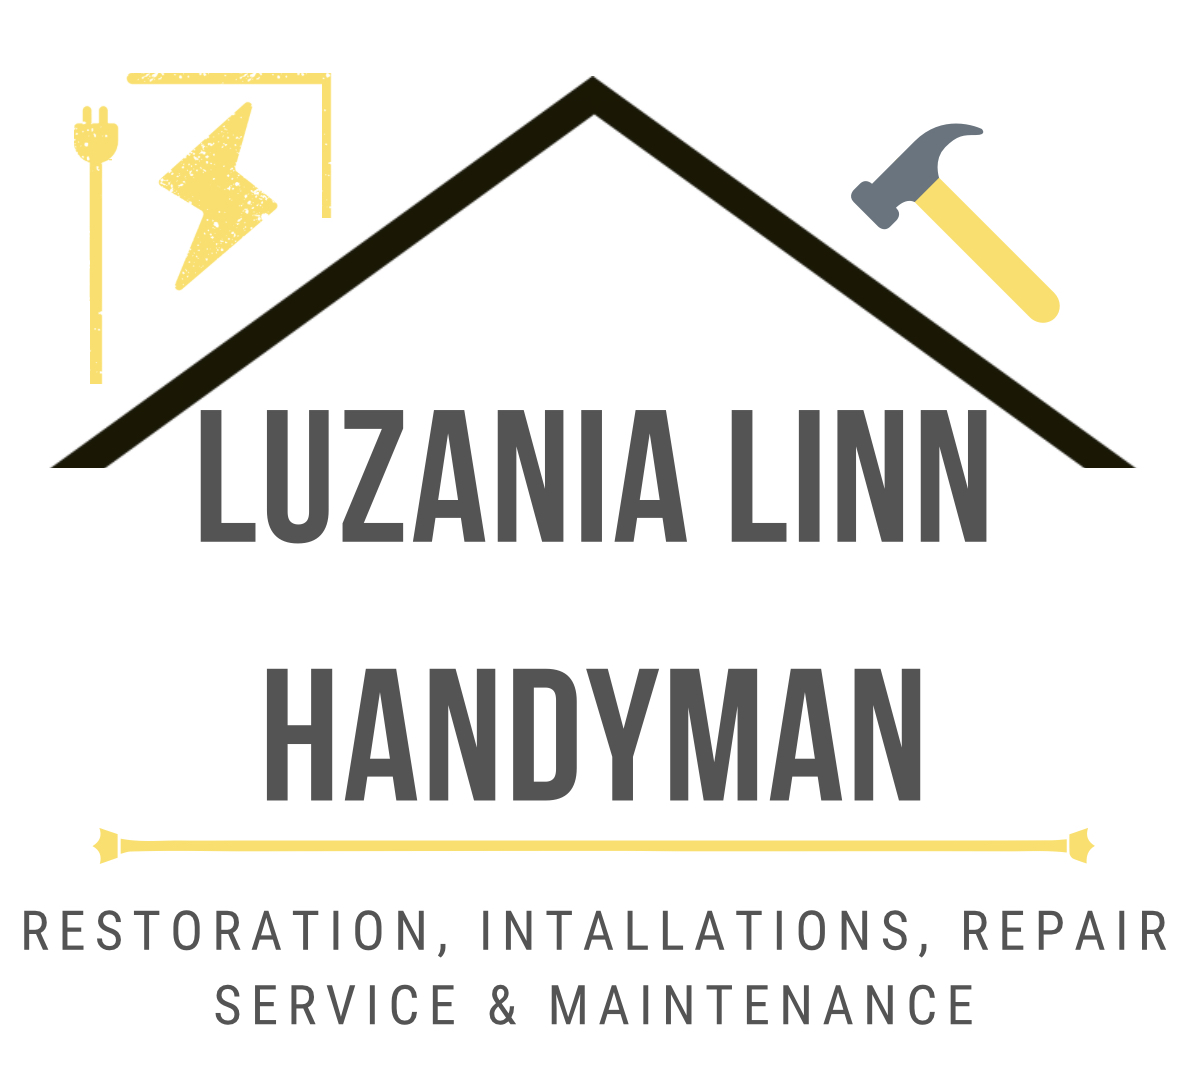 Handyman Linn-Unlicensed Contractor Logo